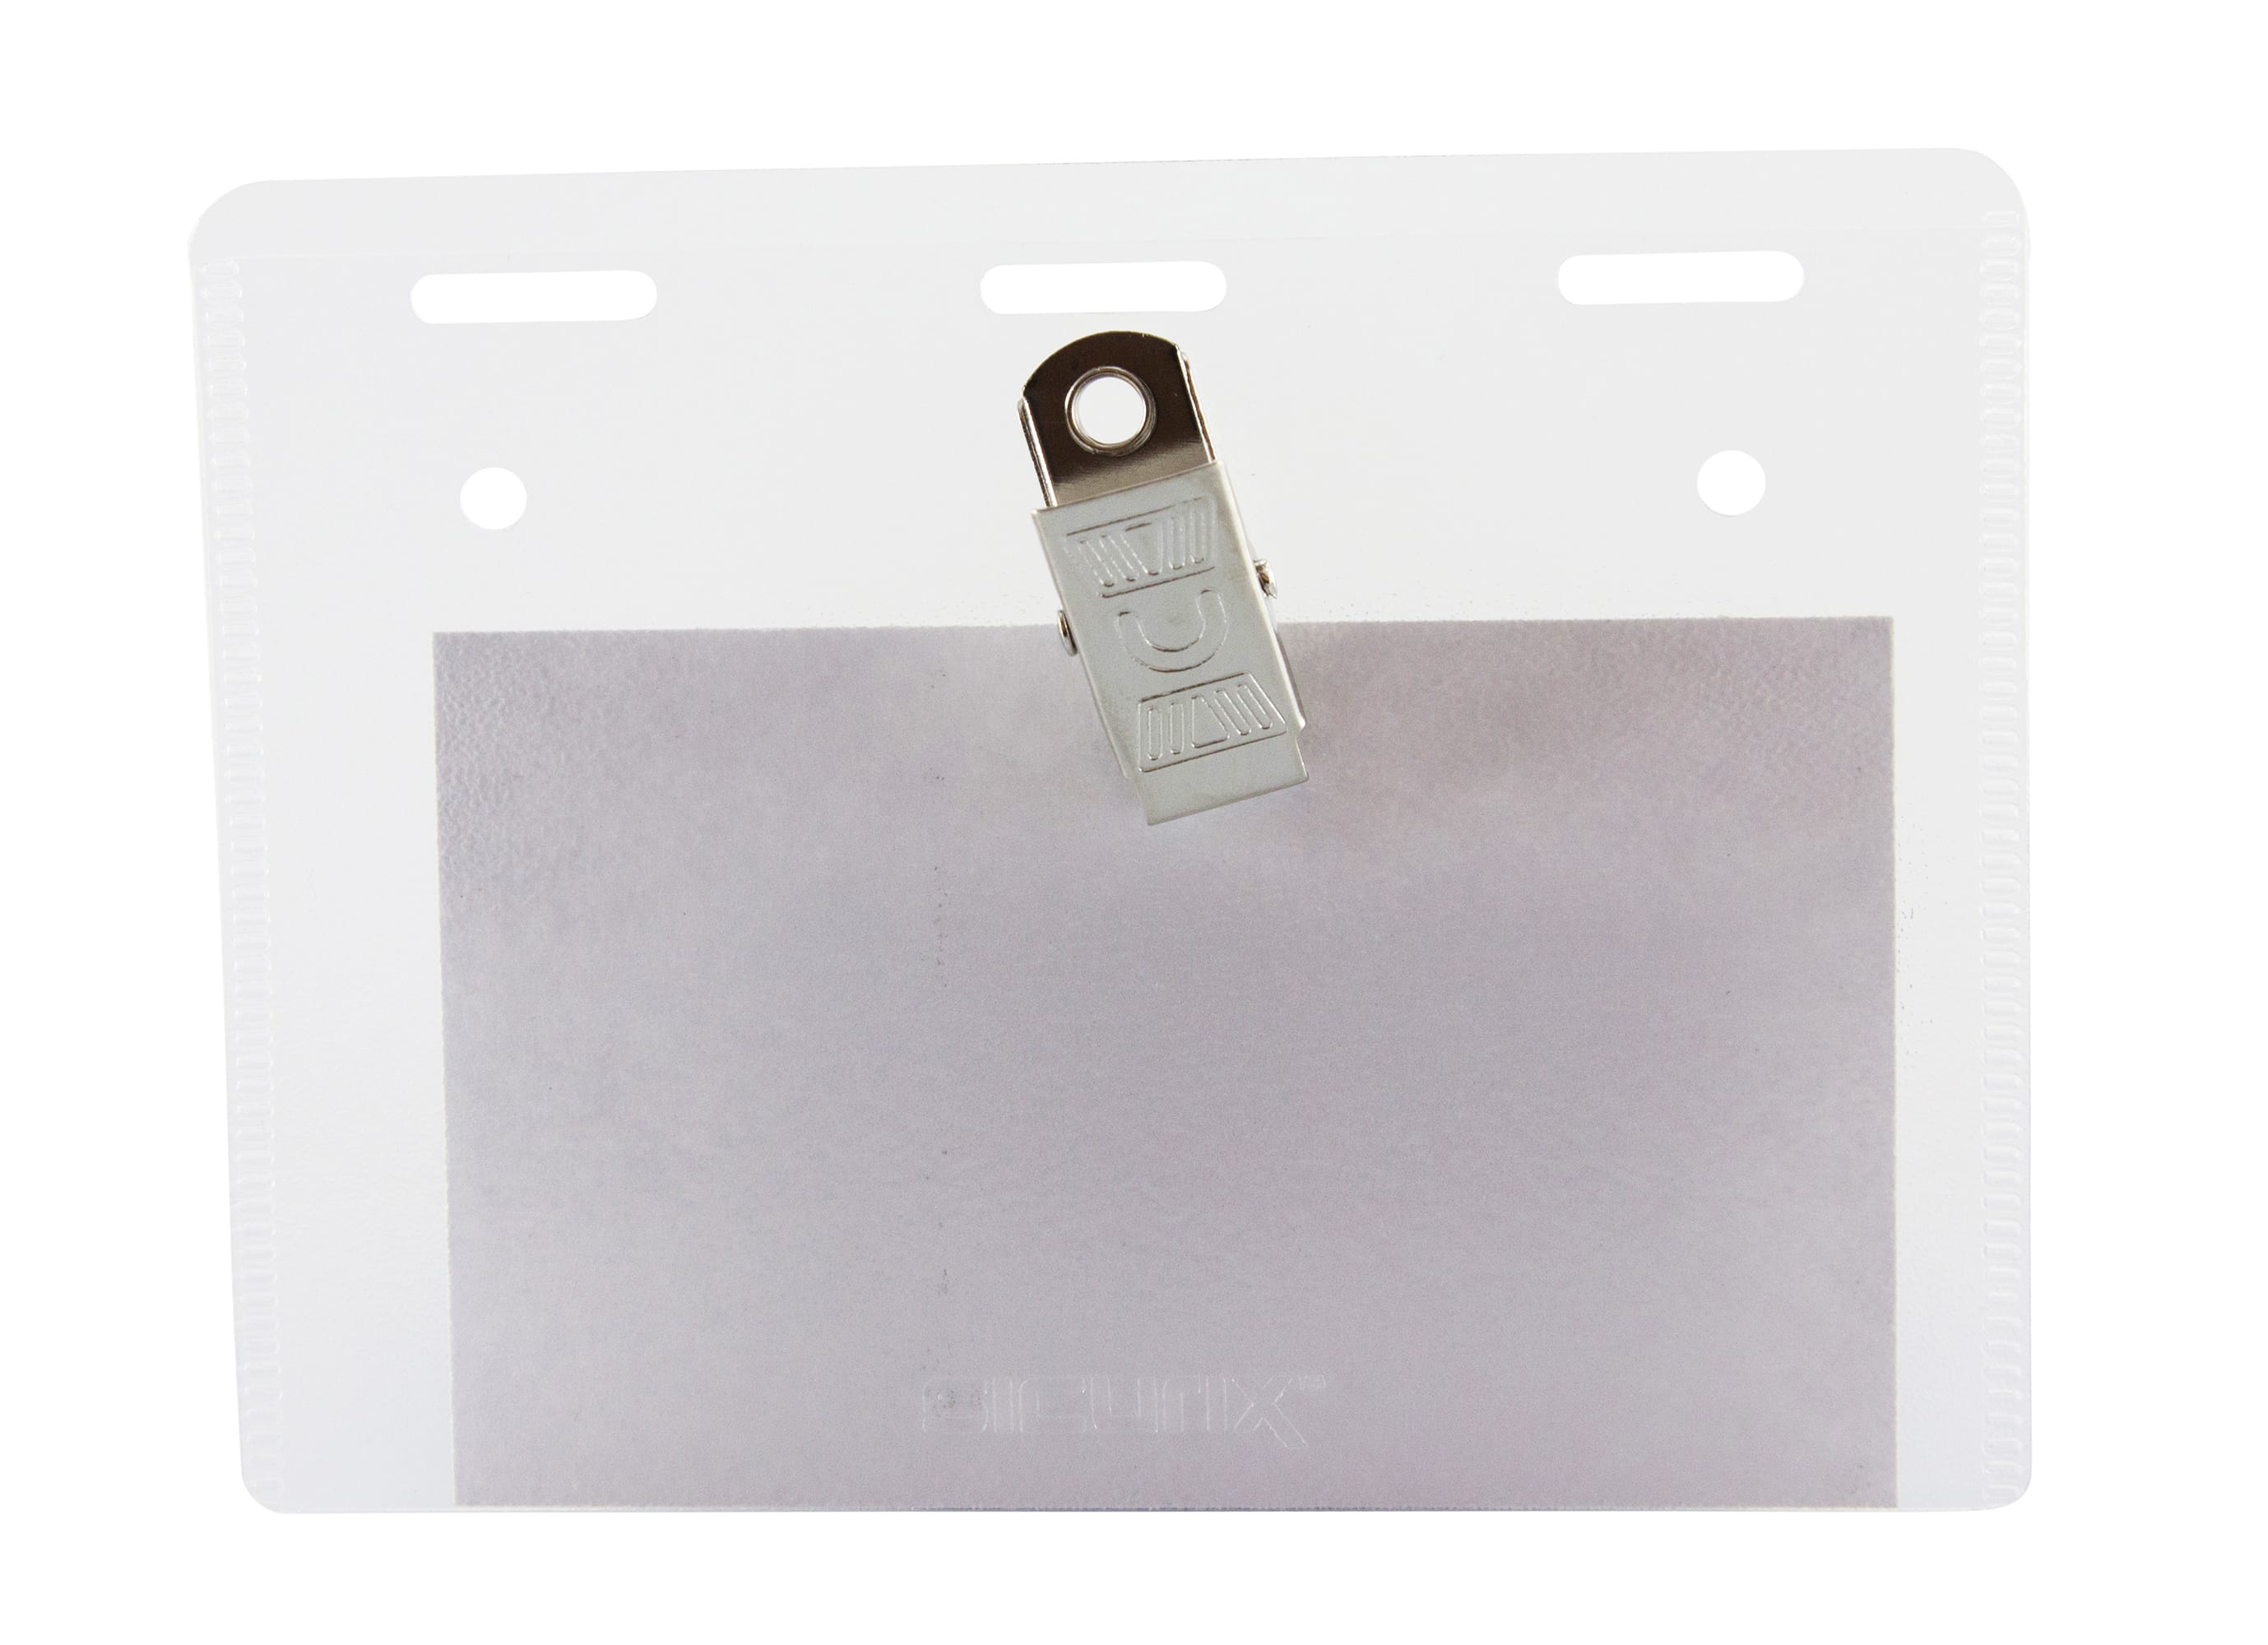 SICURIX Clip Style Printable Badge Kit 4" x 3" Horizontal 50 Pack (67673)